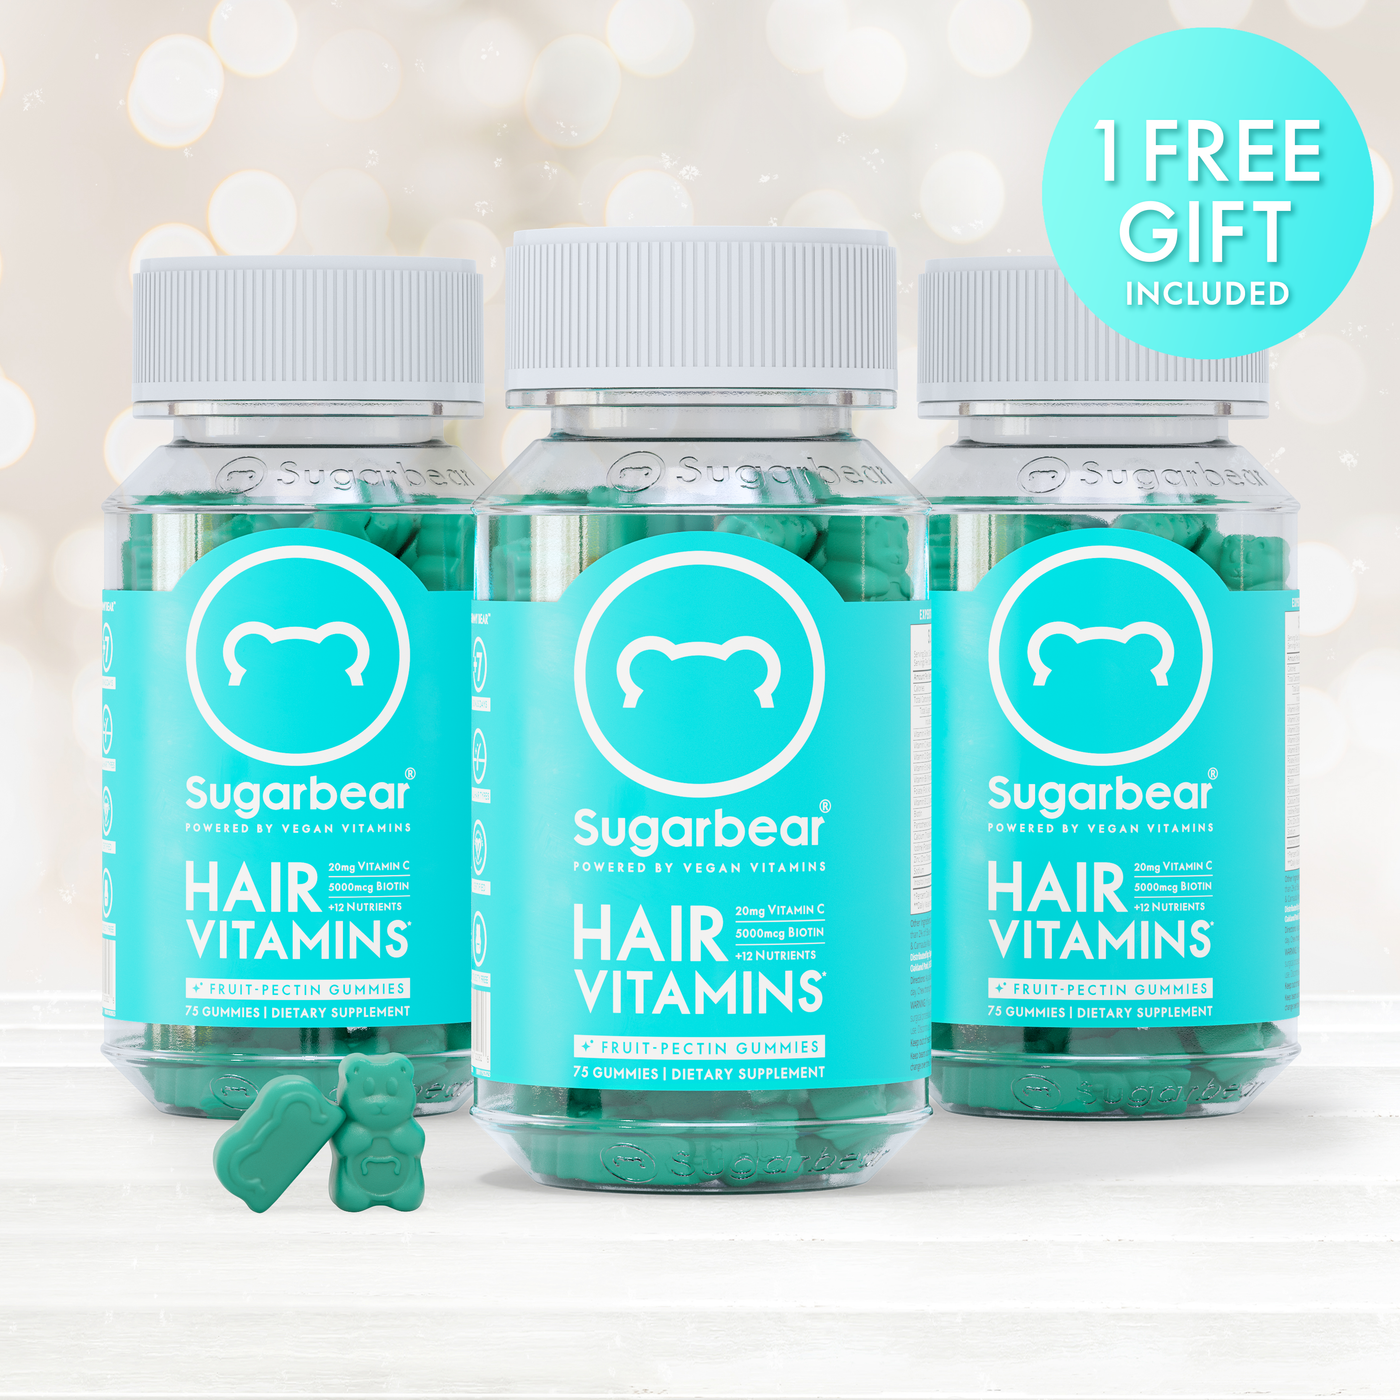 Sugarbear Hair Vitamins - 3 Month Gift Pack + Free Gift